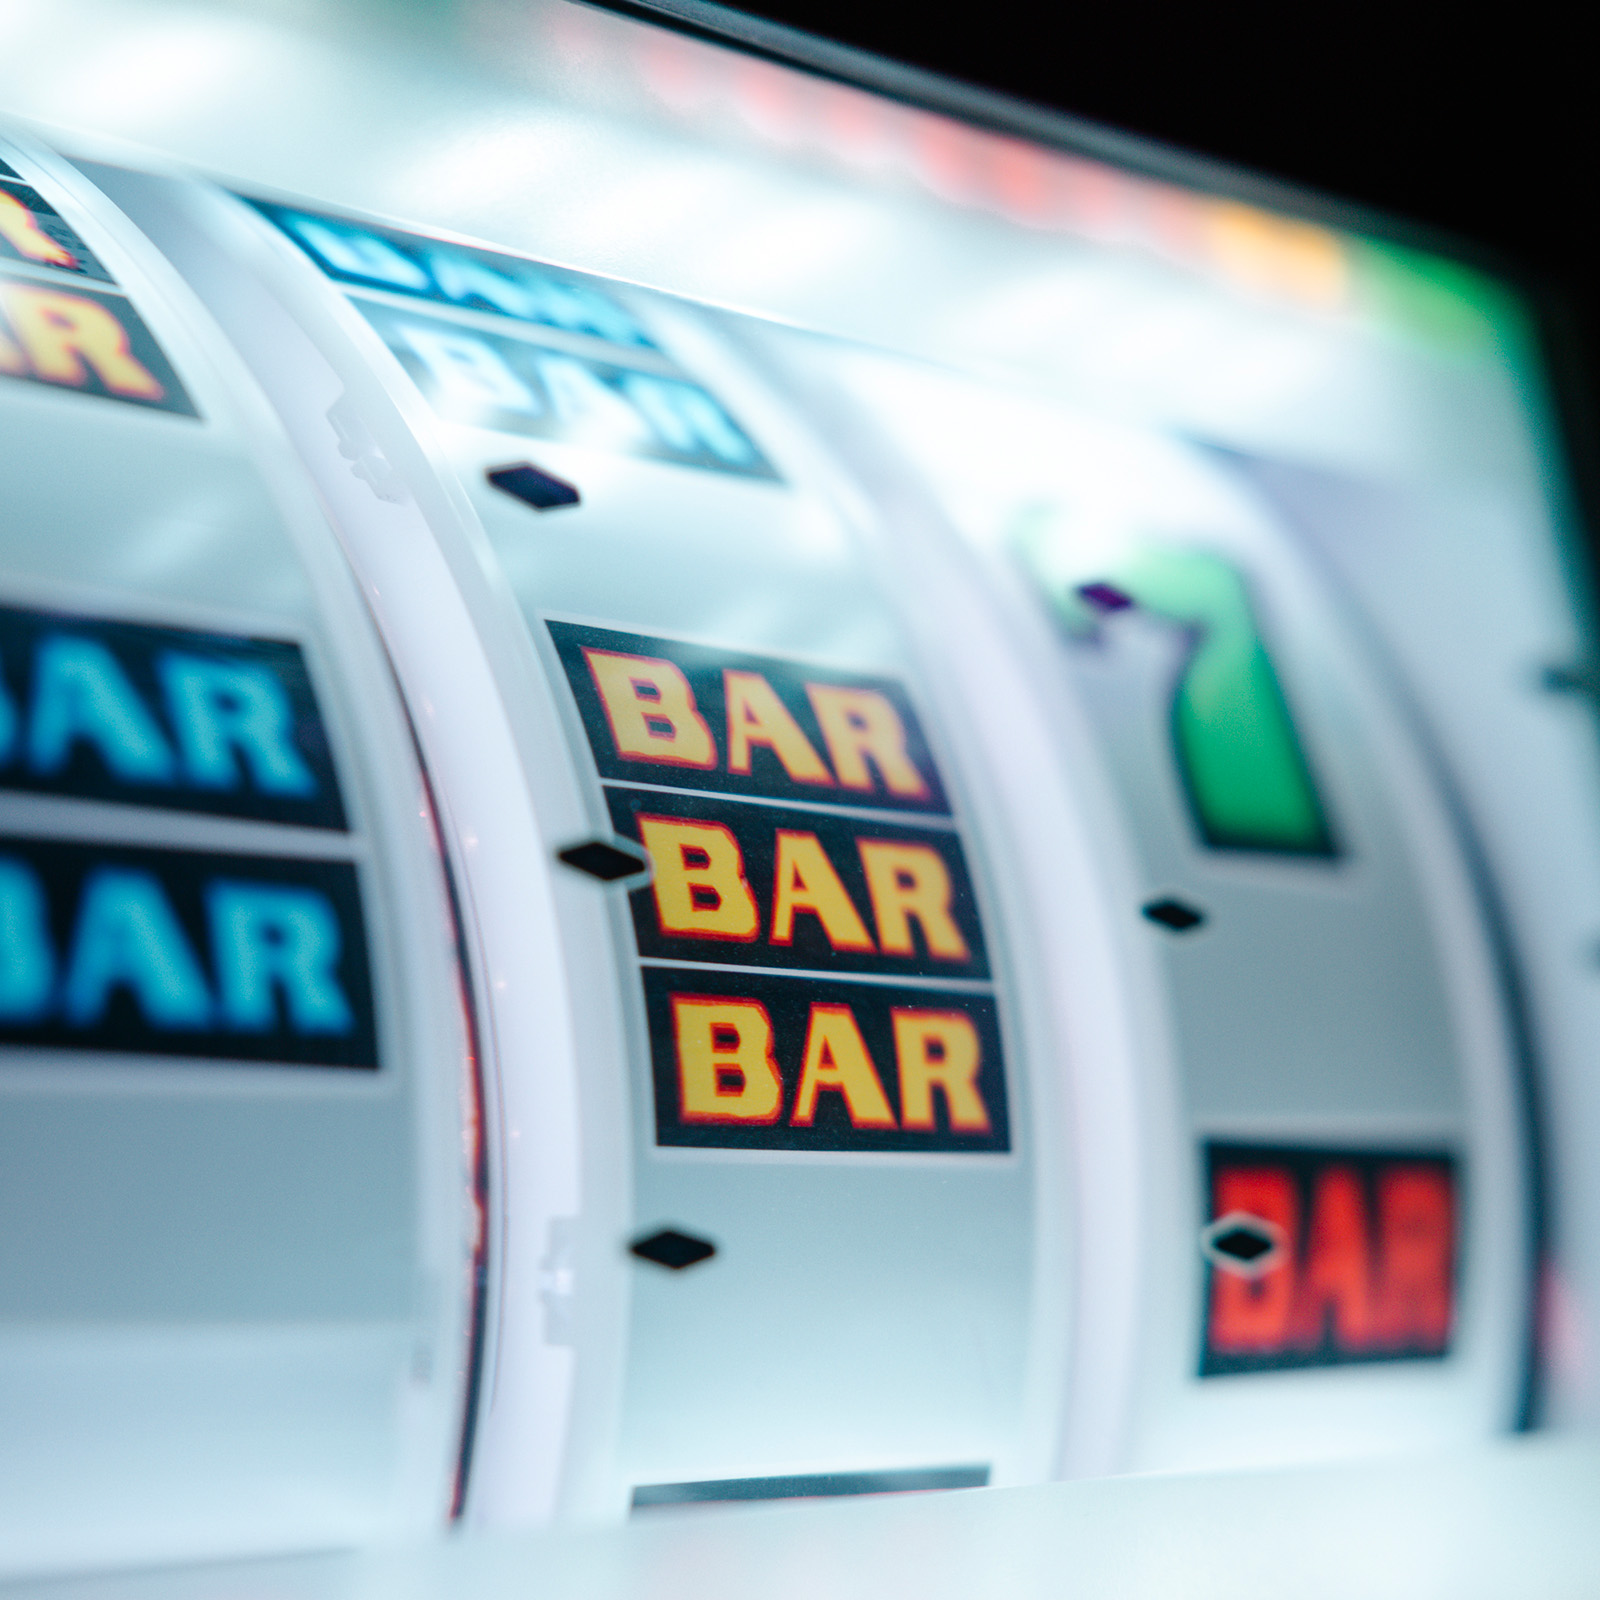 slot machine